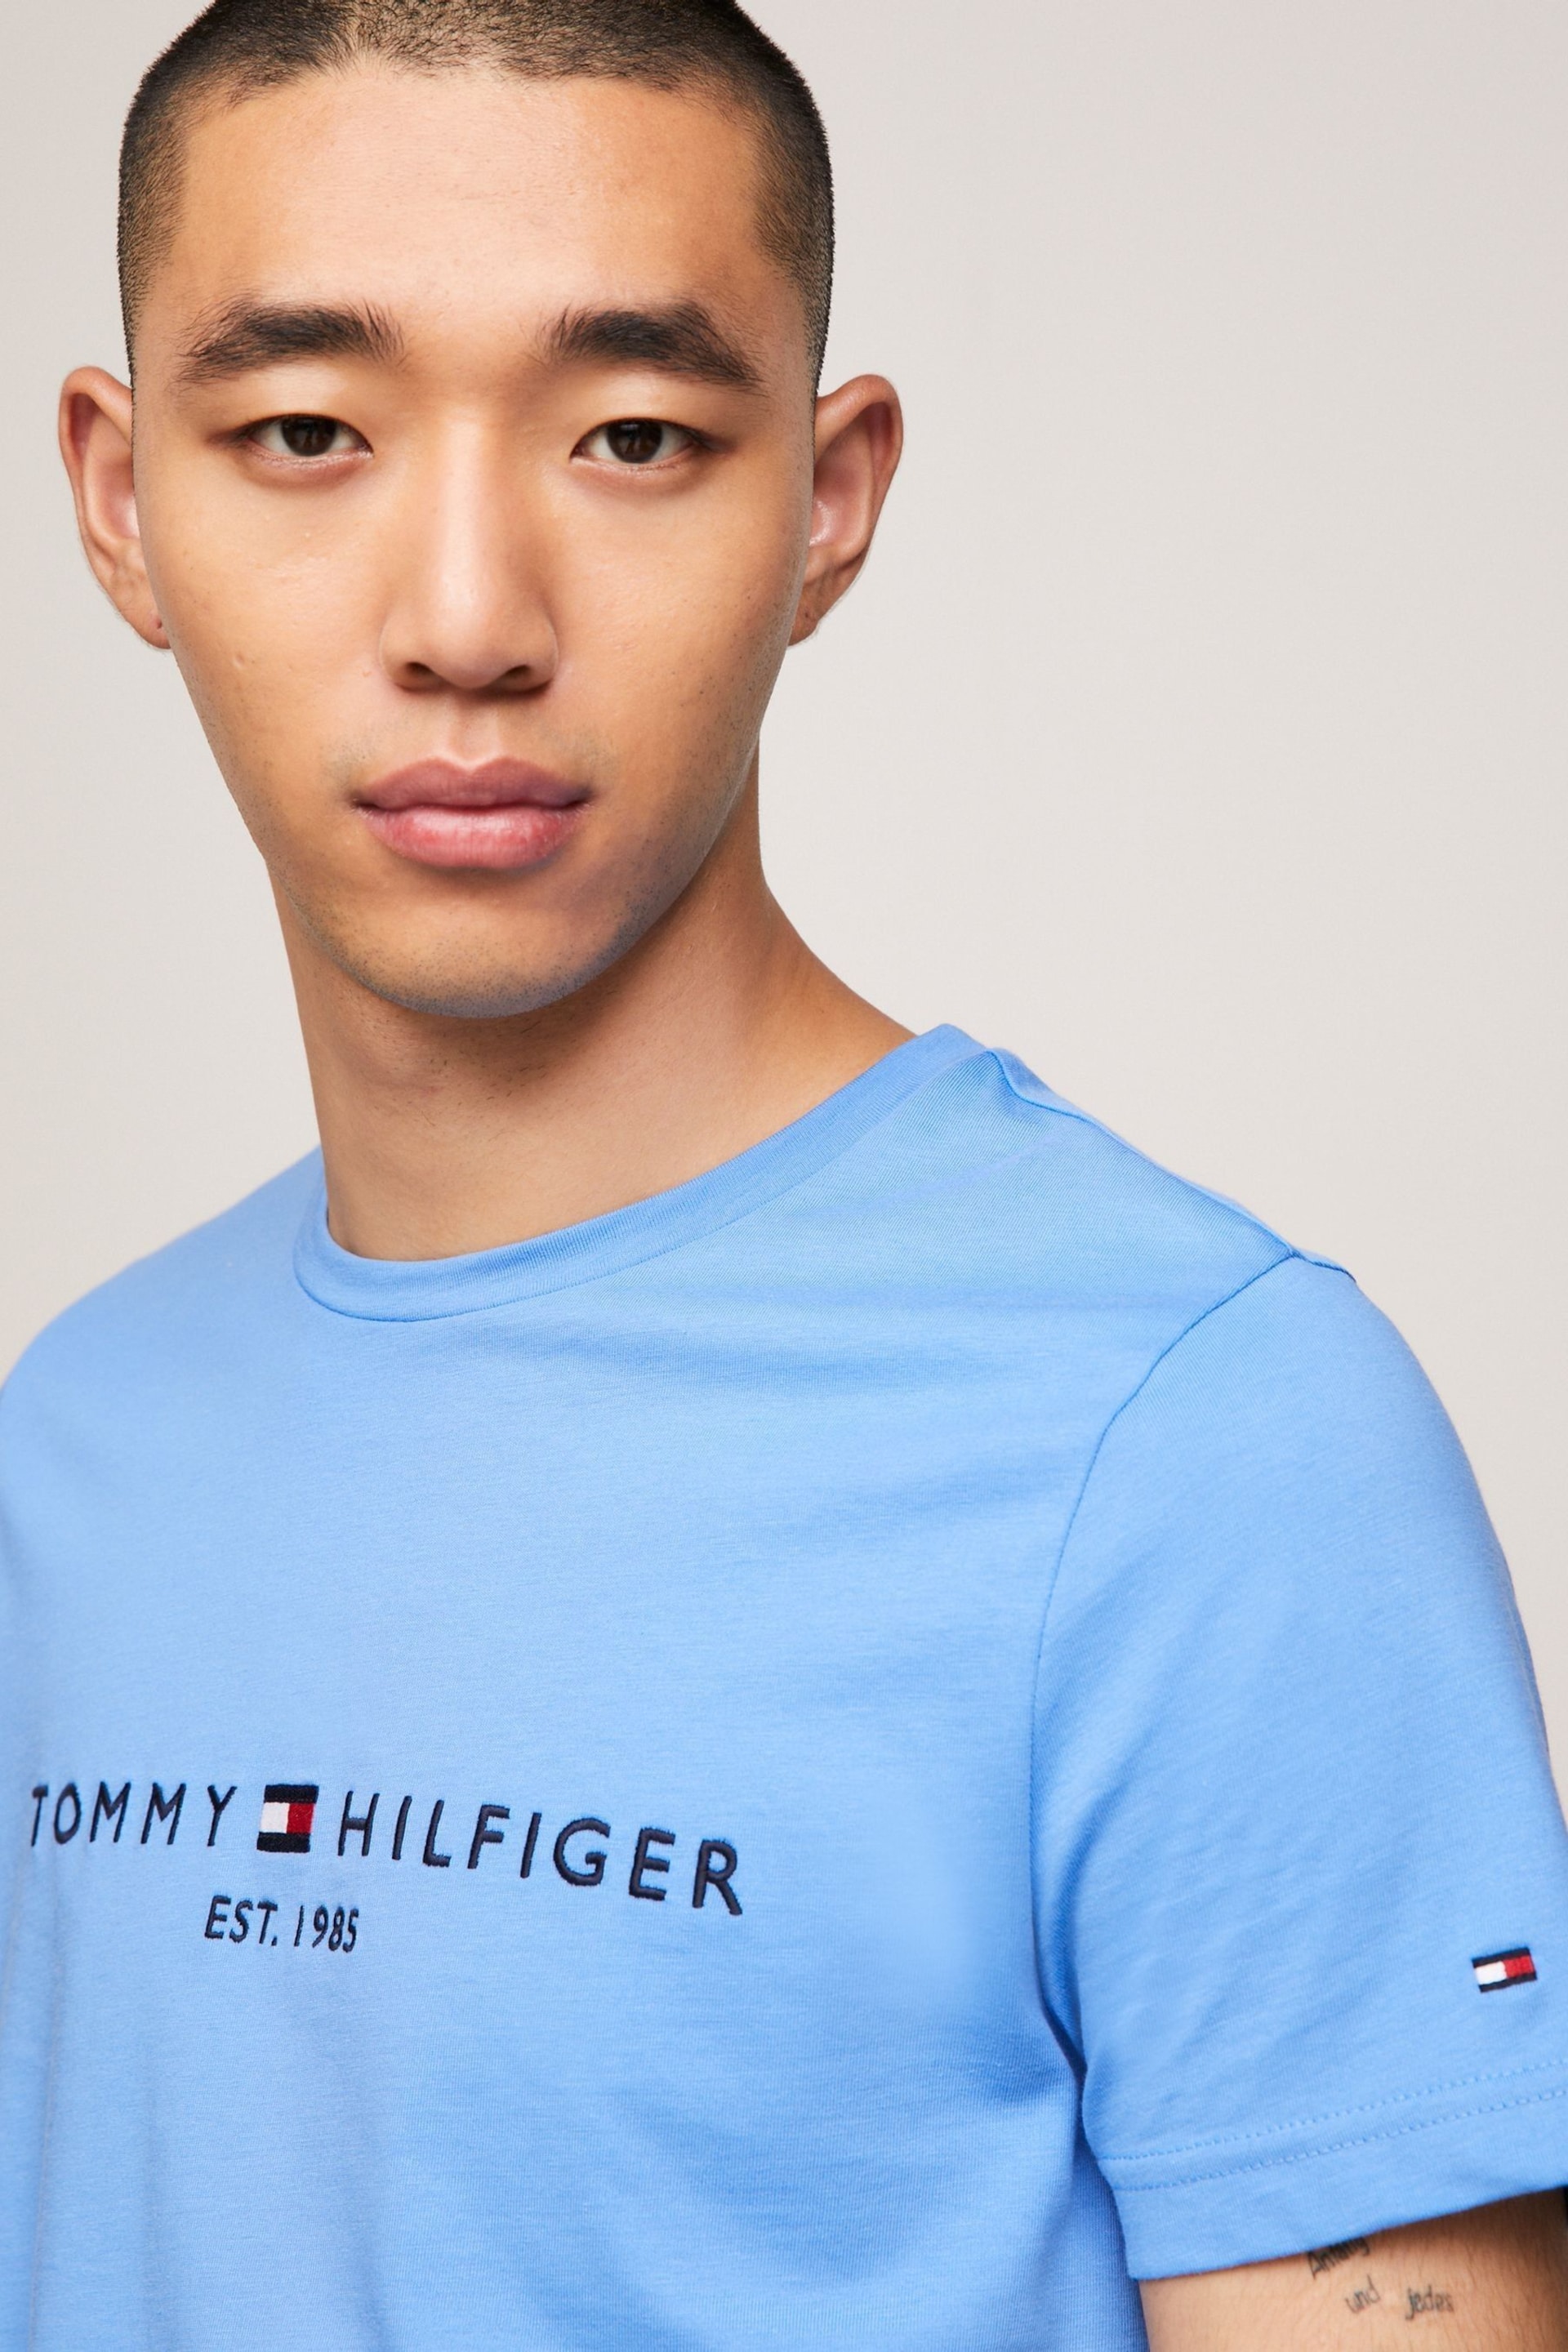 Tommy Hilfiger Bluye Logo T-Shirt - Image 4 of 5